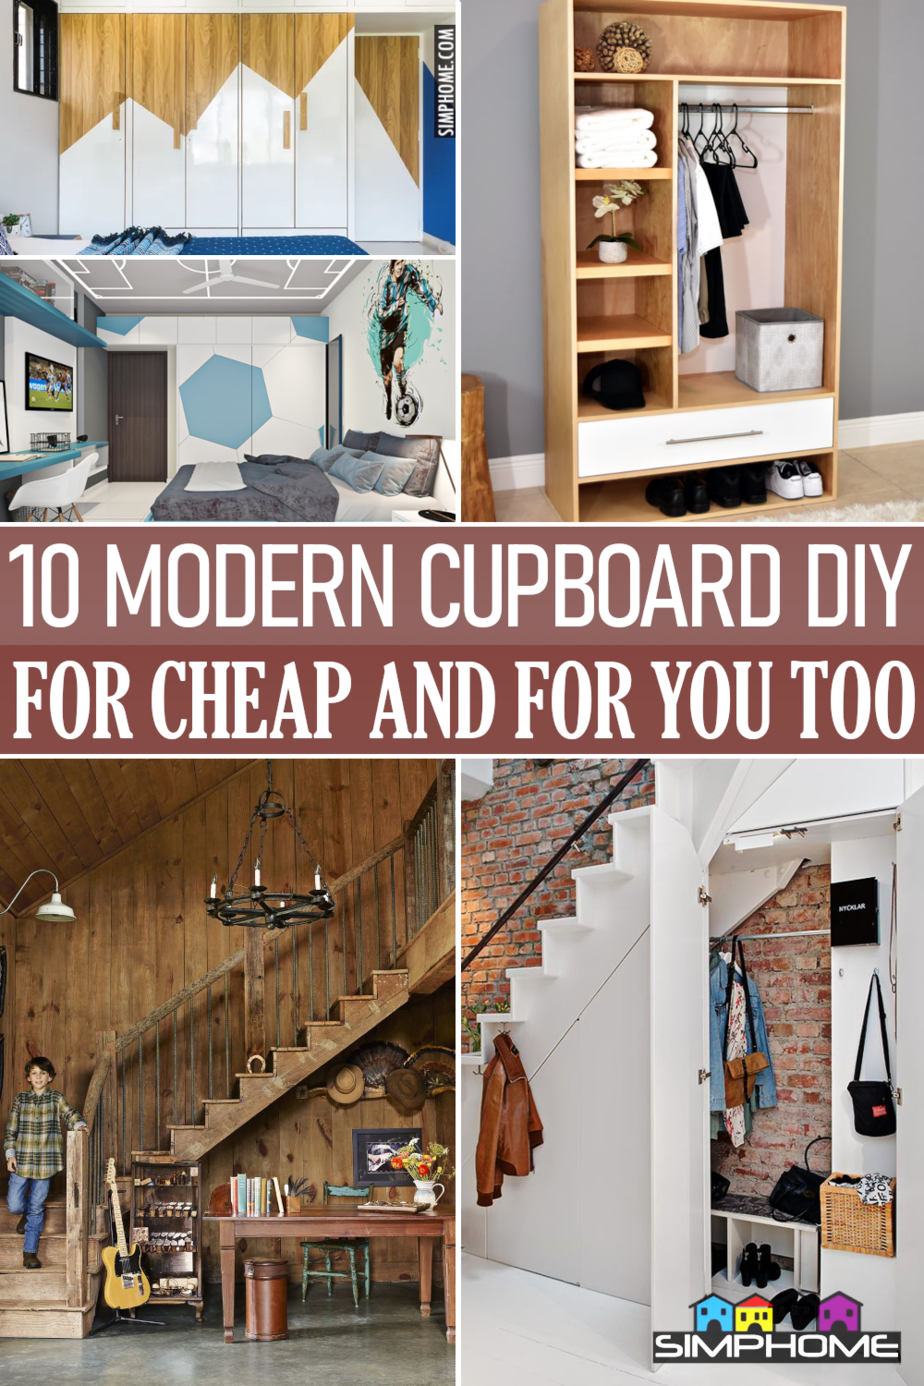 10 Modern Cupboard Design for Cheap via Simphome.com Featured